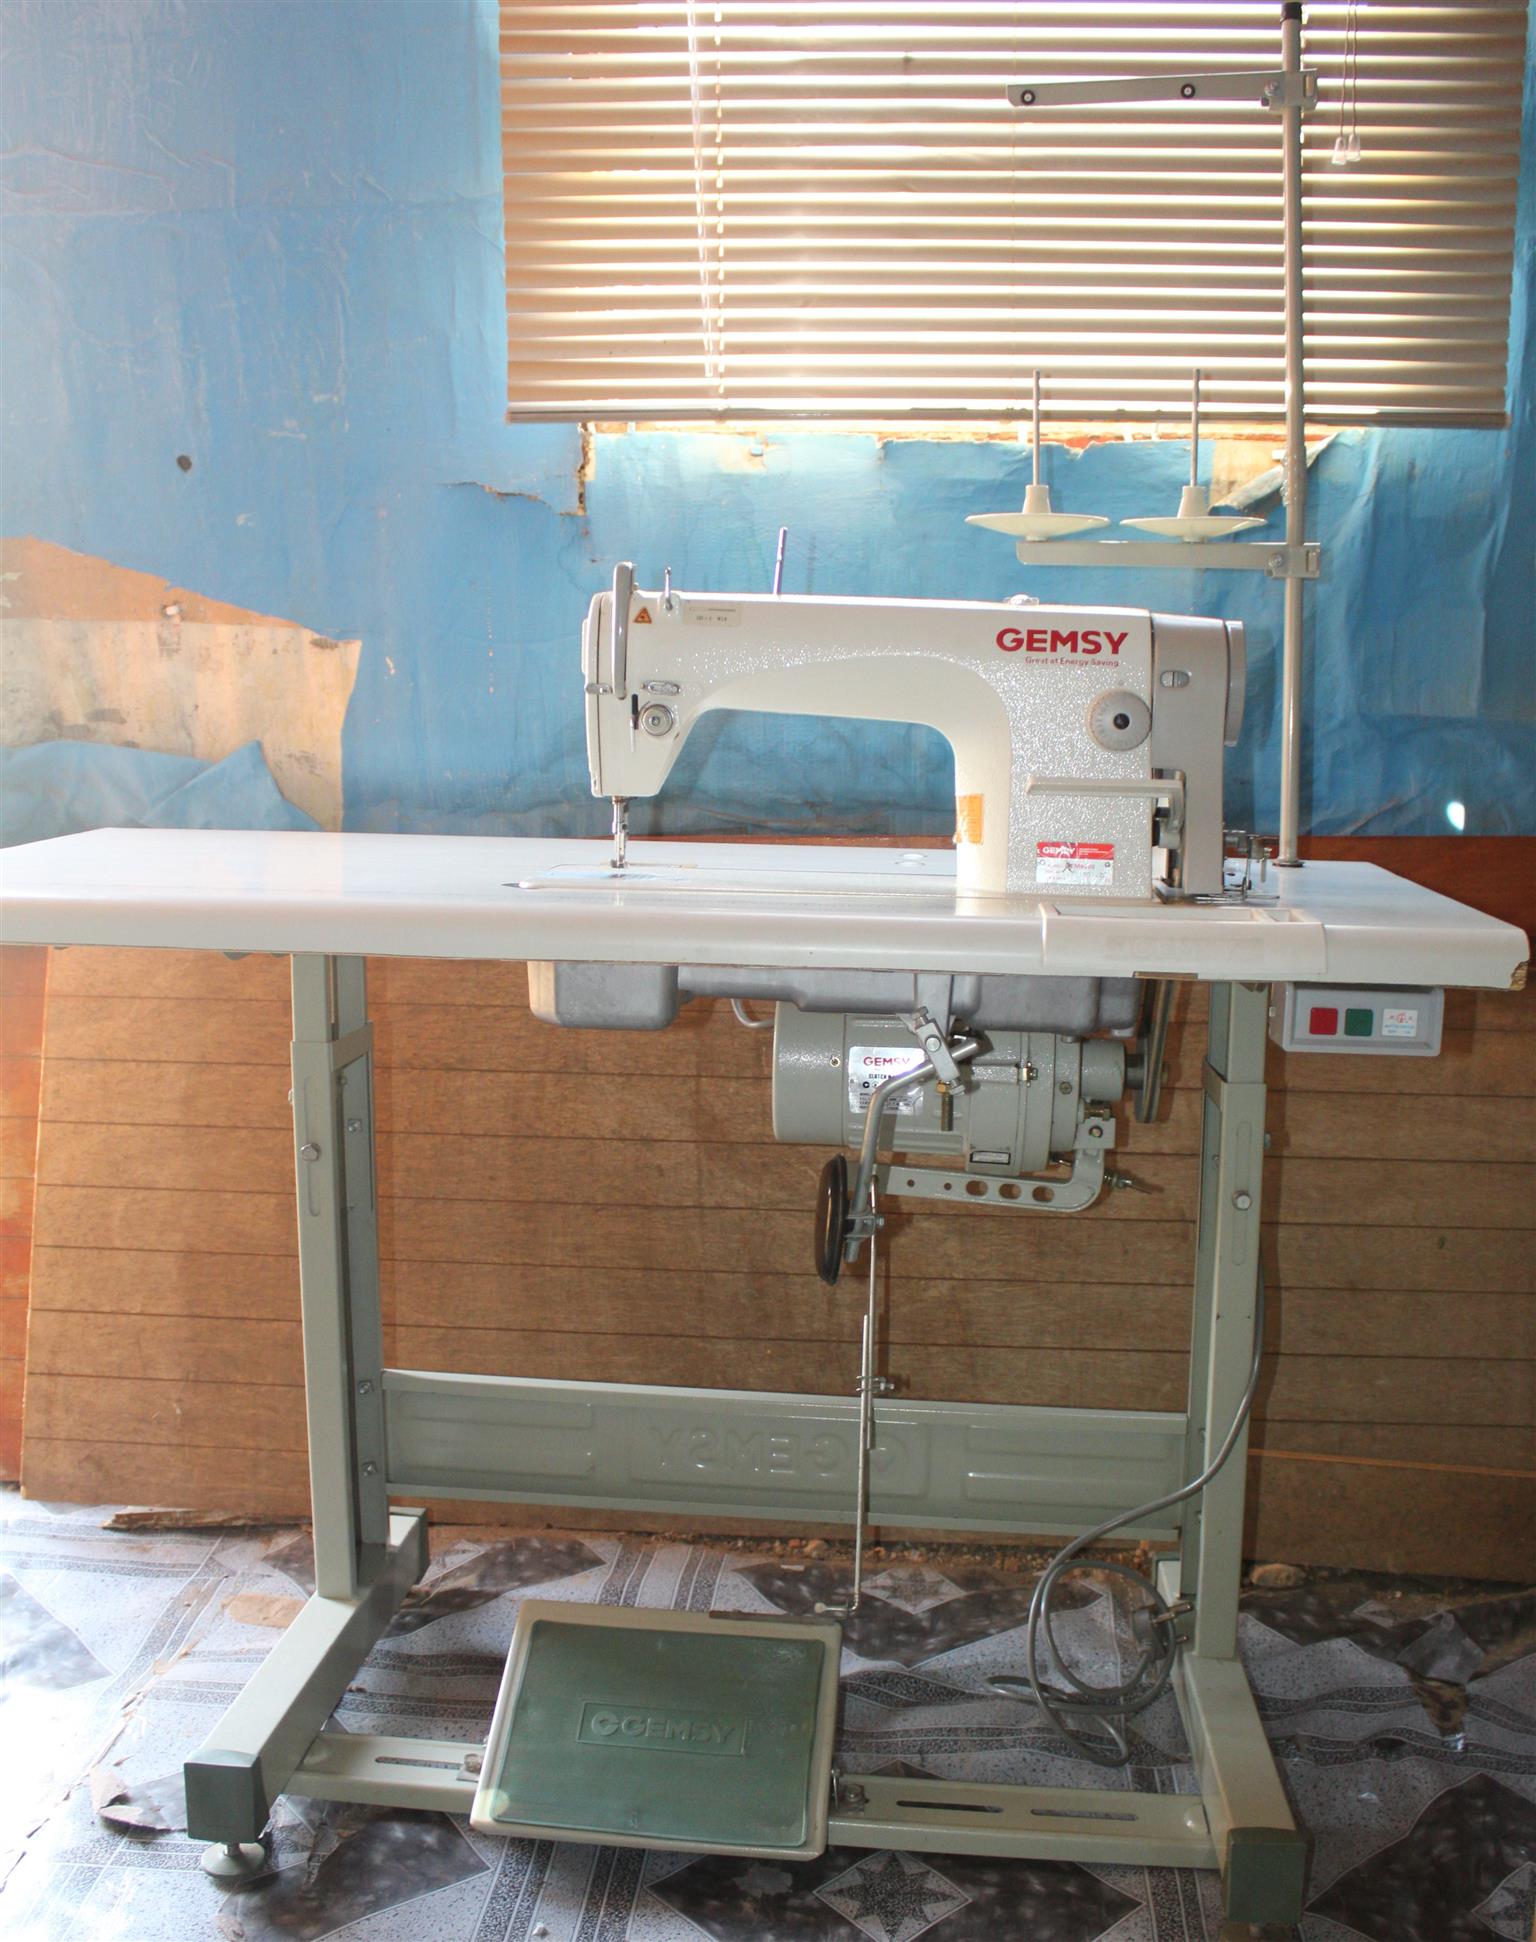 Gemsy industrial sewing machine